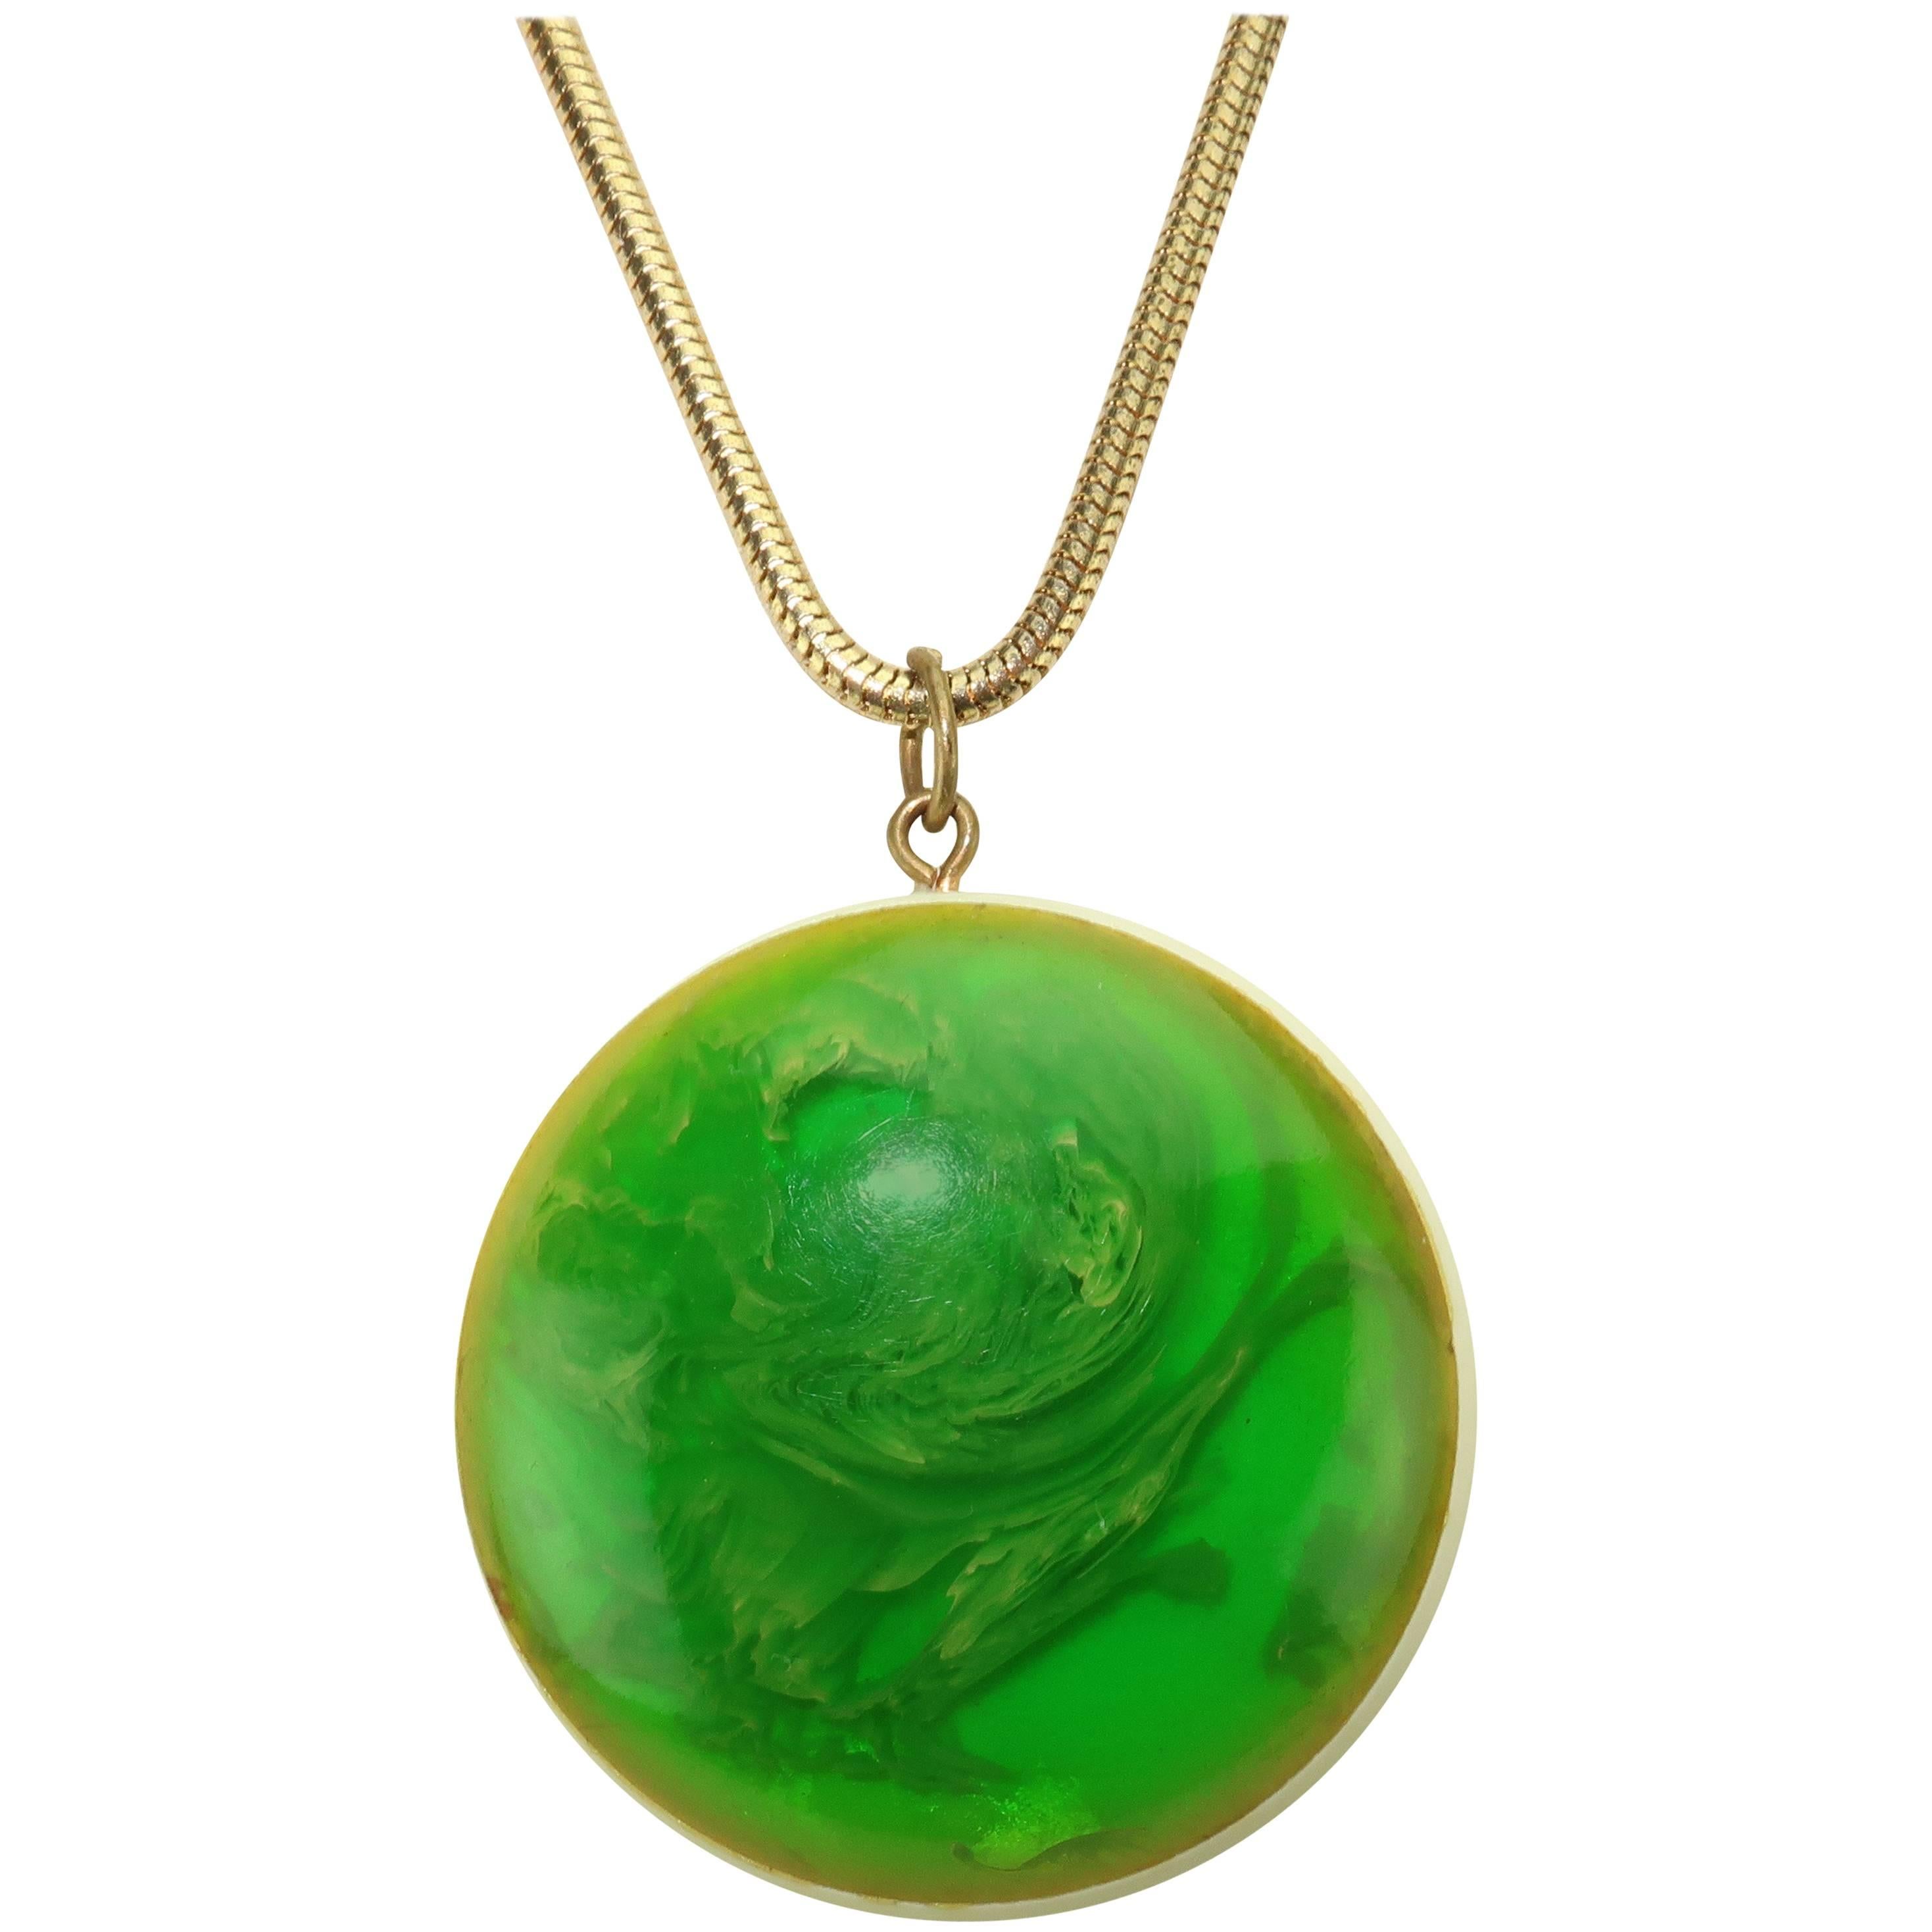 Mod Green Marbled Acrylic Pendant Necklace, circa 1970 